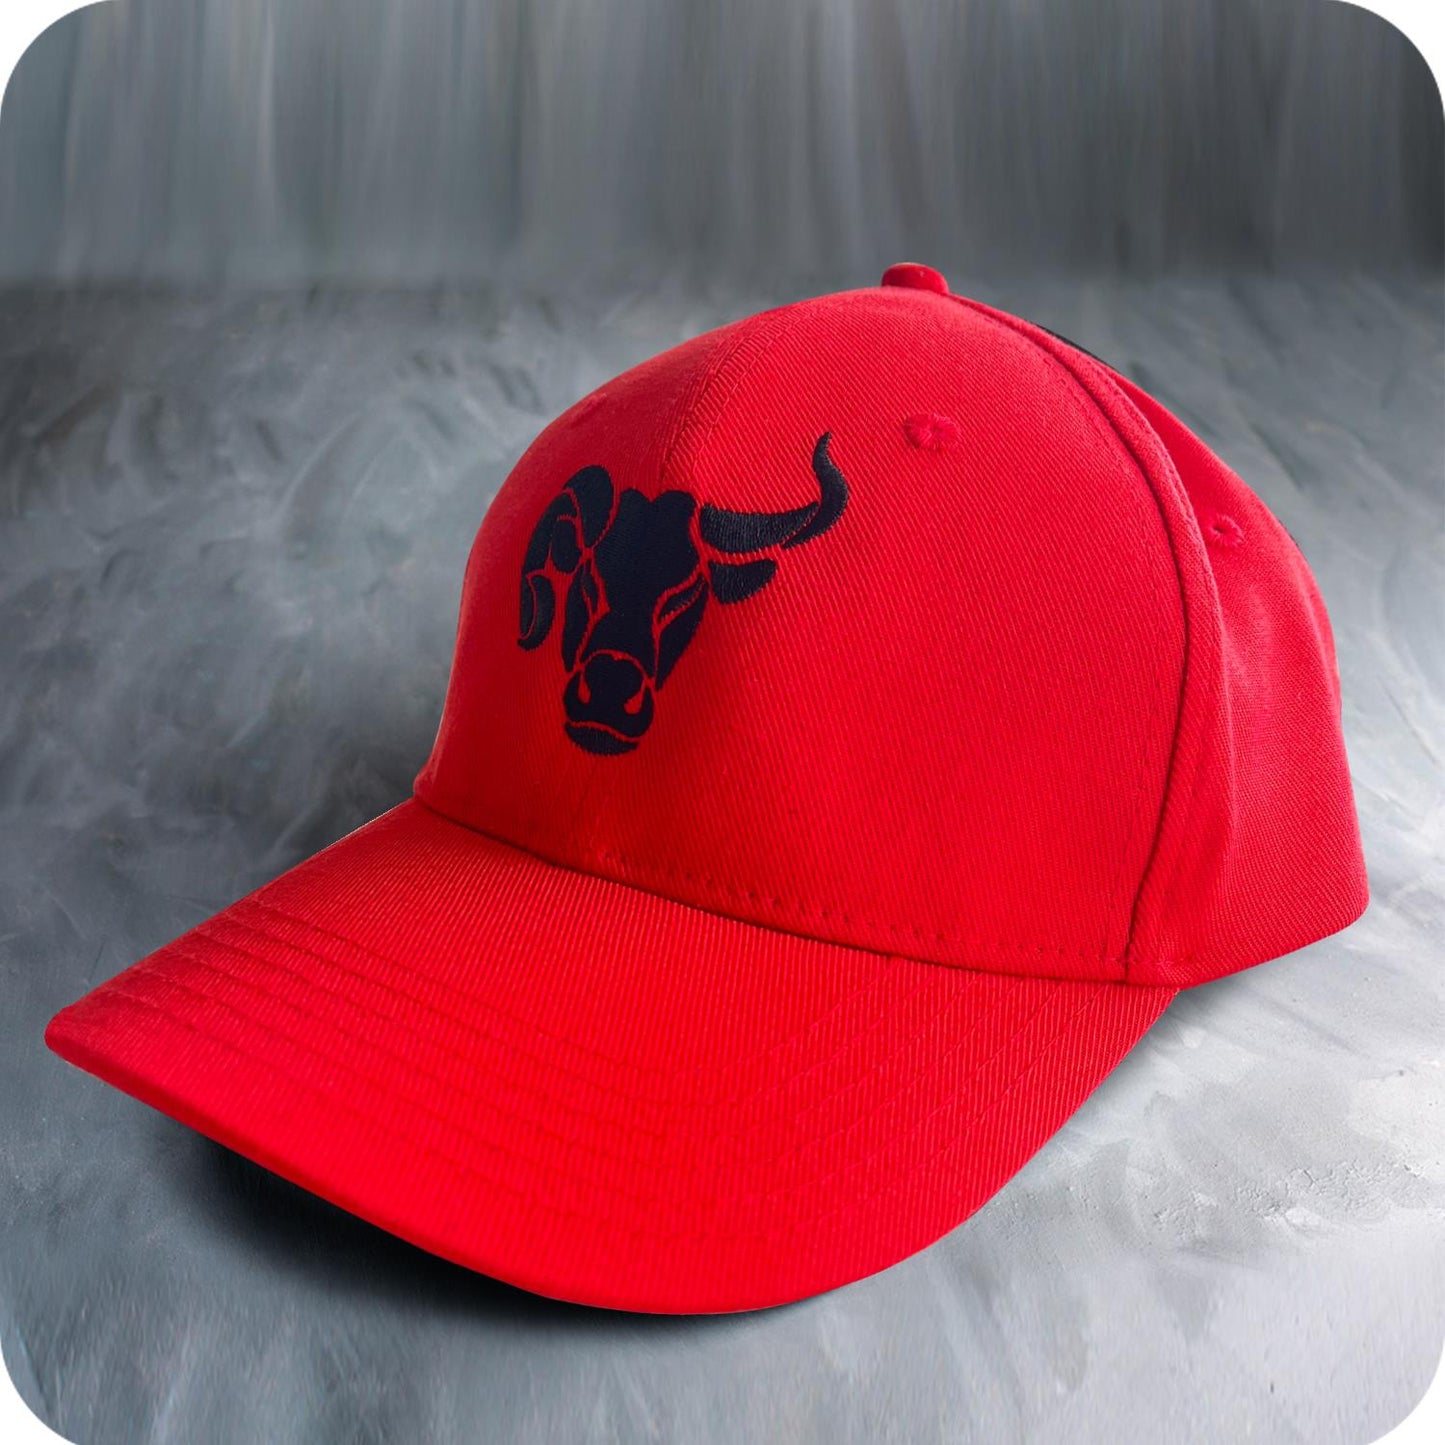 The Red Baseball Cap